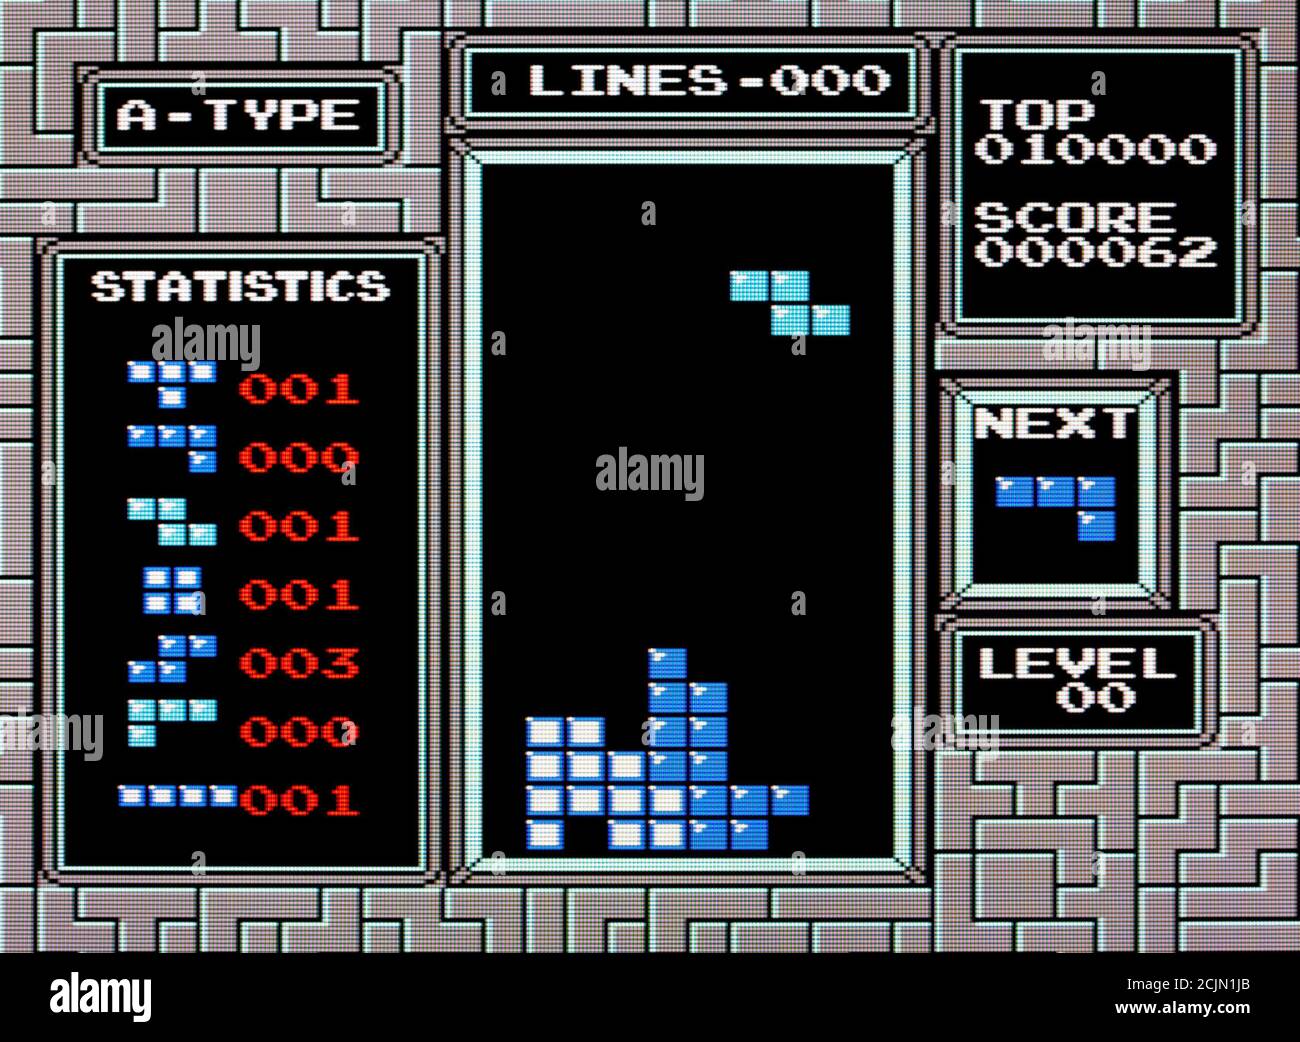 Tetris - Nintendo Entertainment System - NES Videogame - Editorial use only  Stock Photo - Alamy